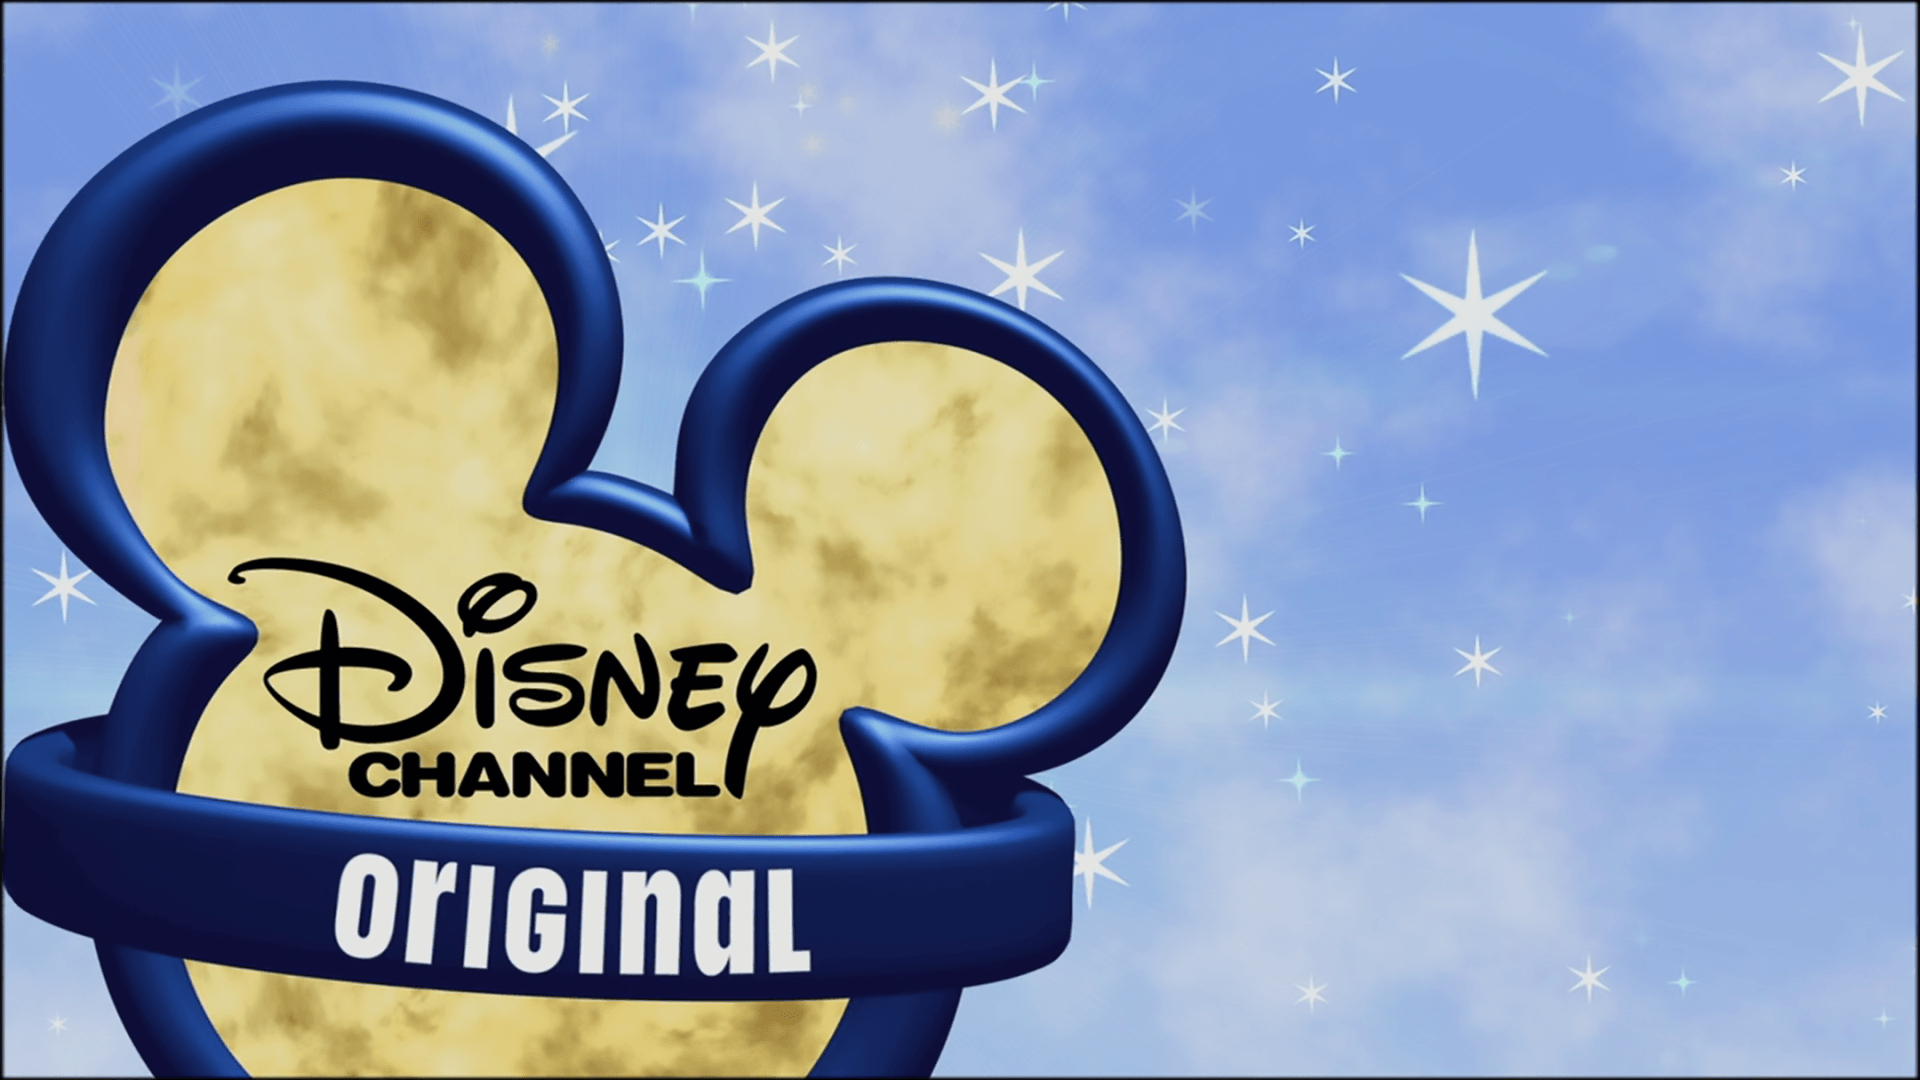 Old Disney Channel Logo - Image - Disney Channel Original 2007 16 Wishes.png | Logopedia ...